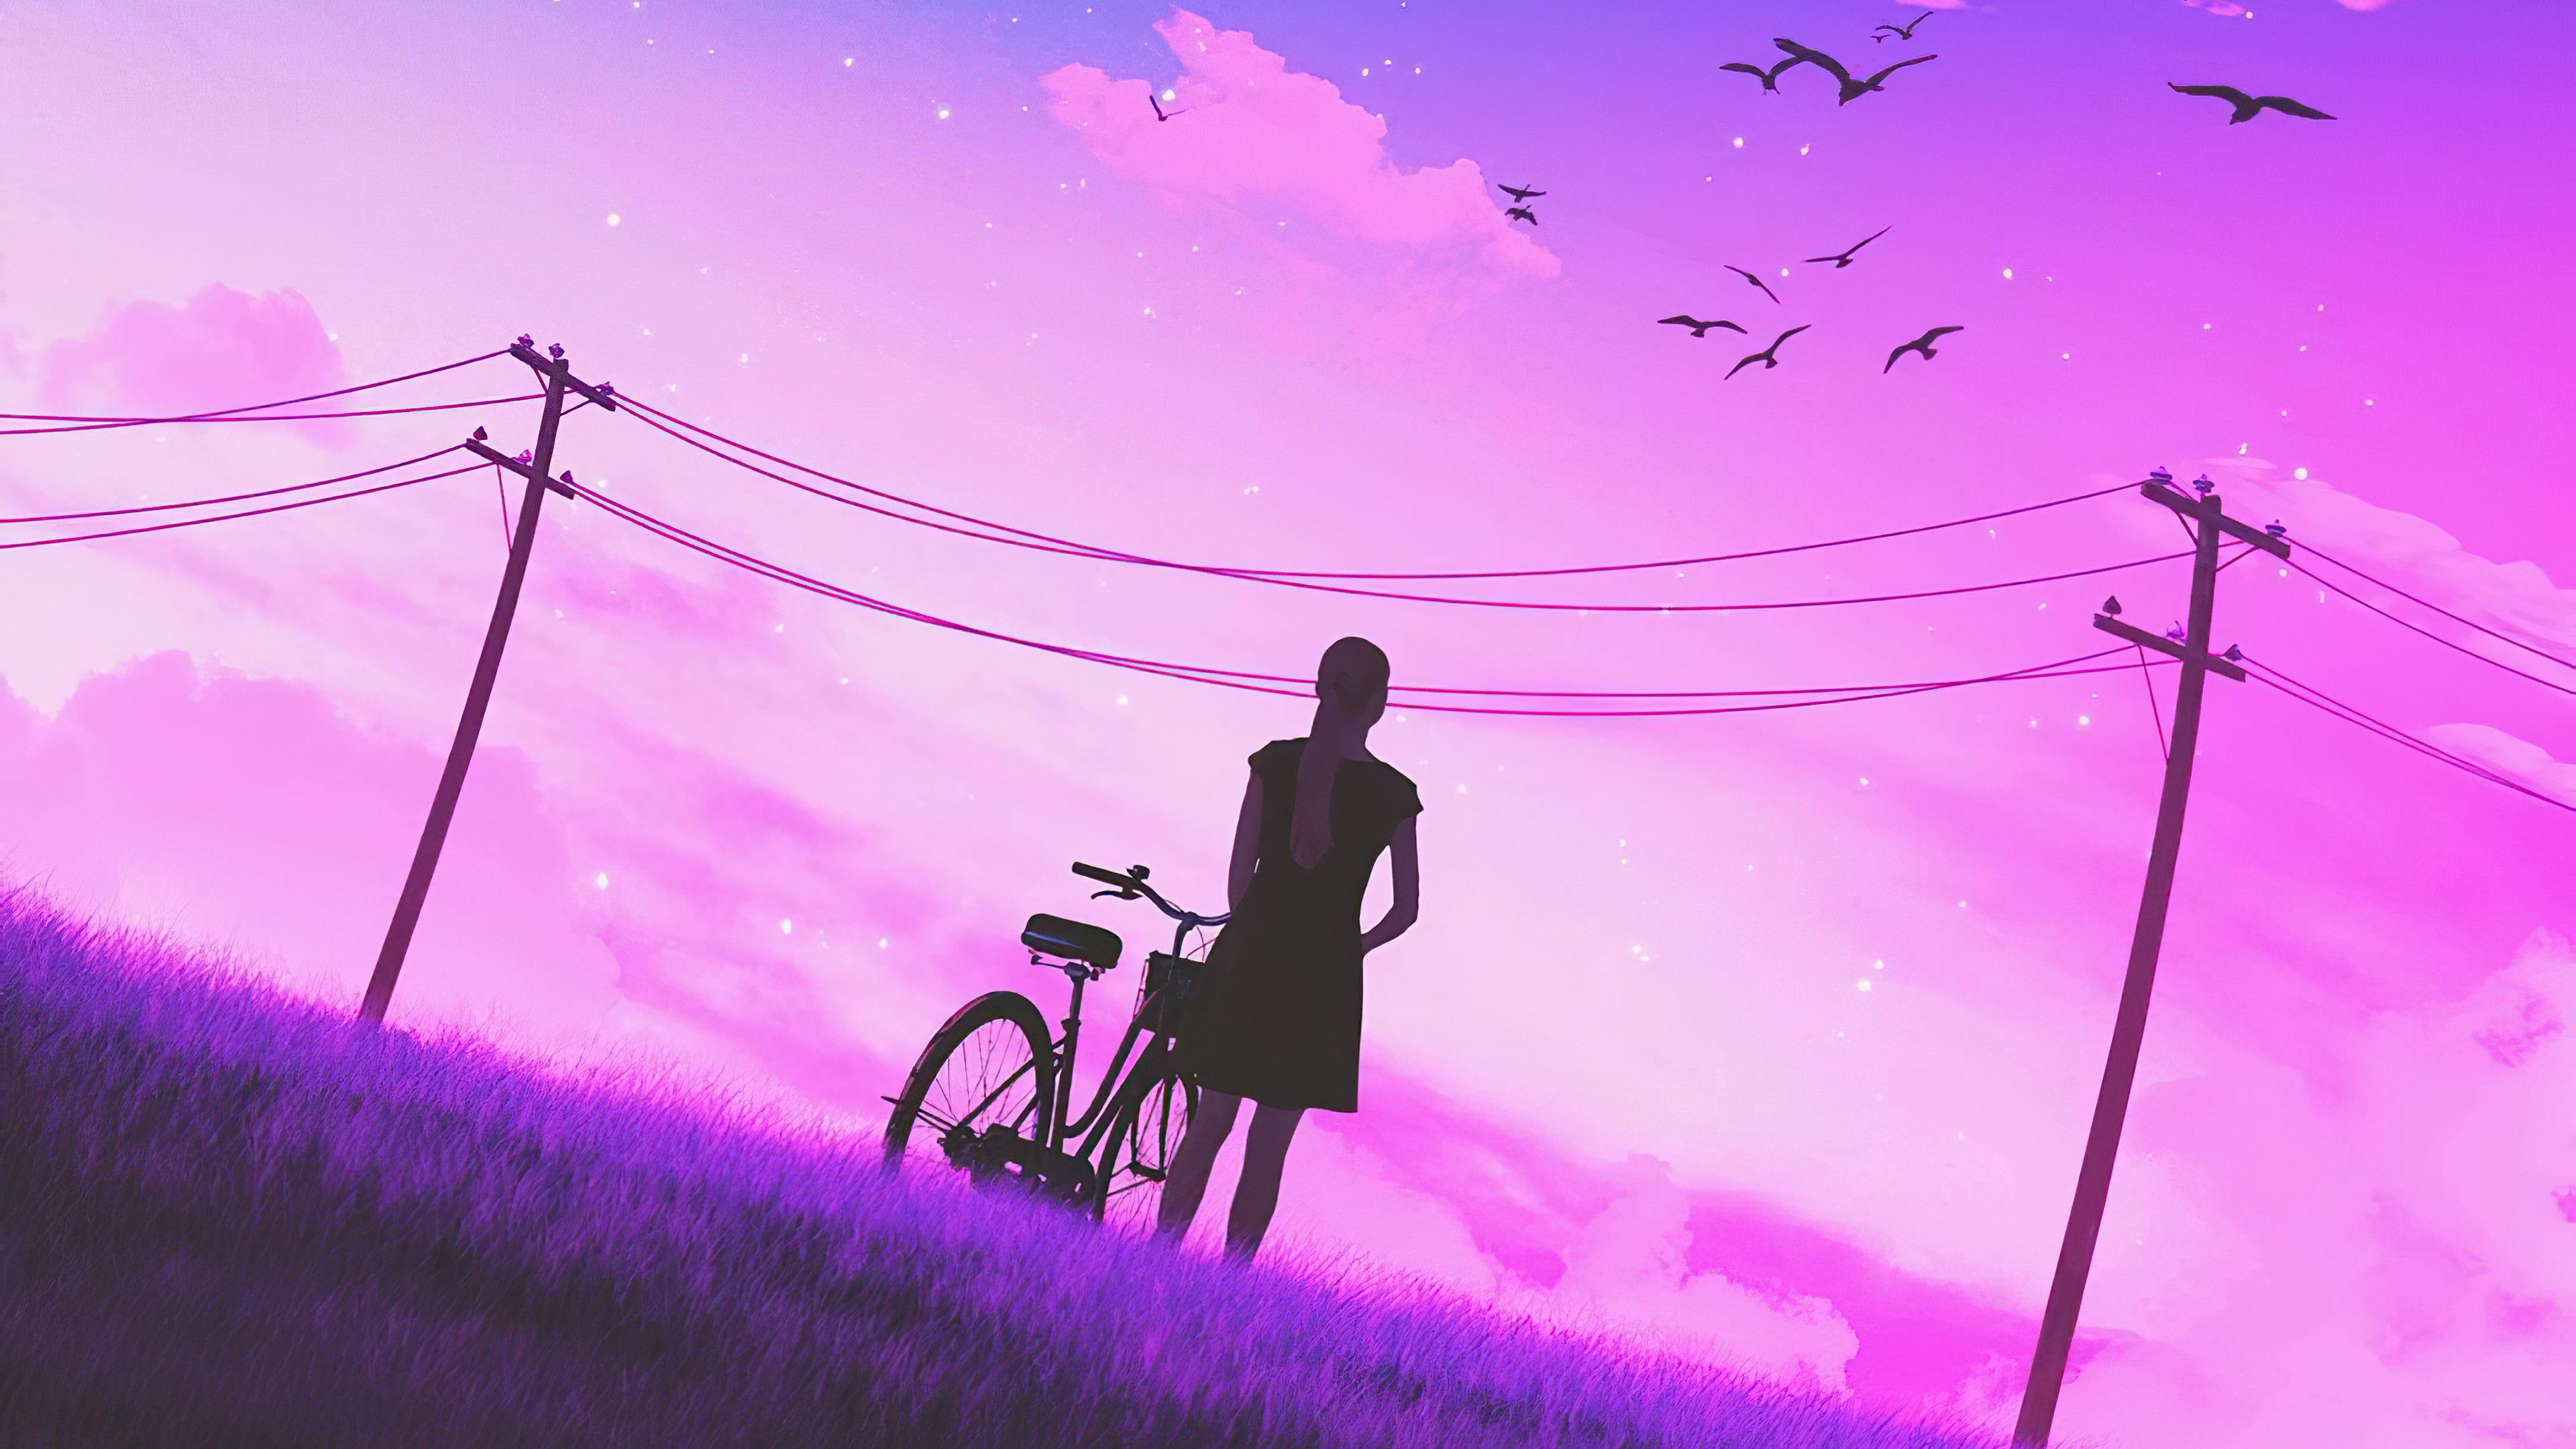 Girl Bicycle Vaporwave Art 4k, HD Artist, 4k Wallpapers, Image.